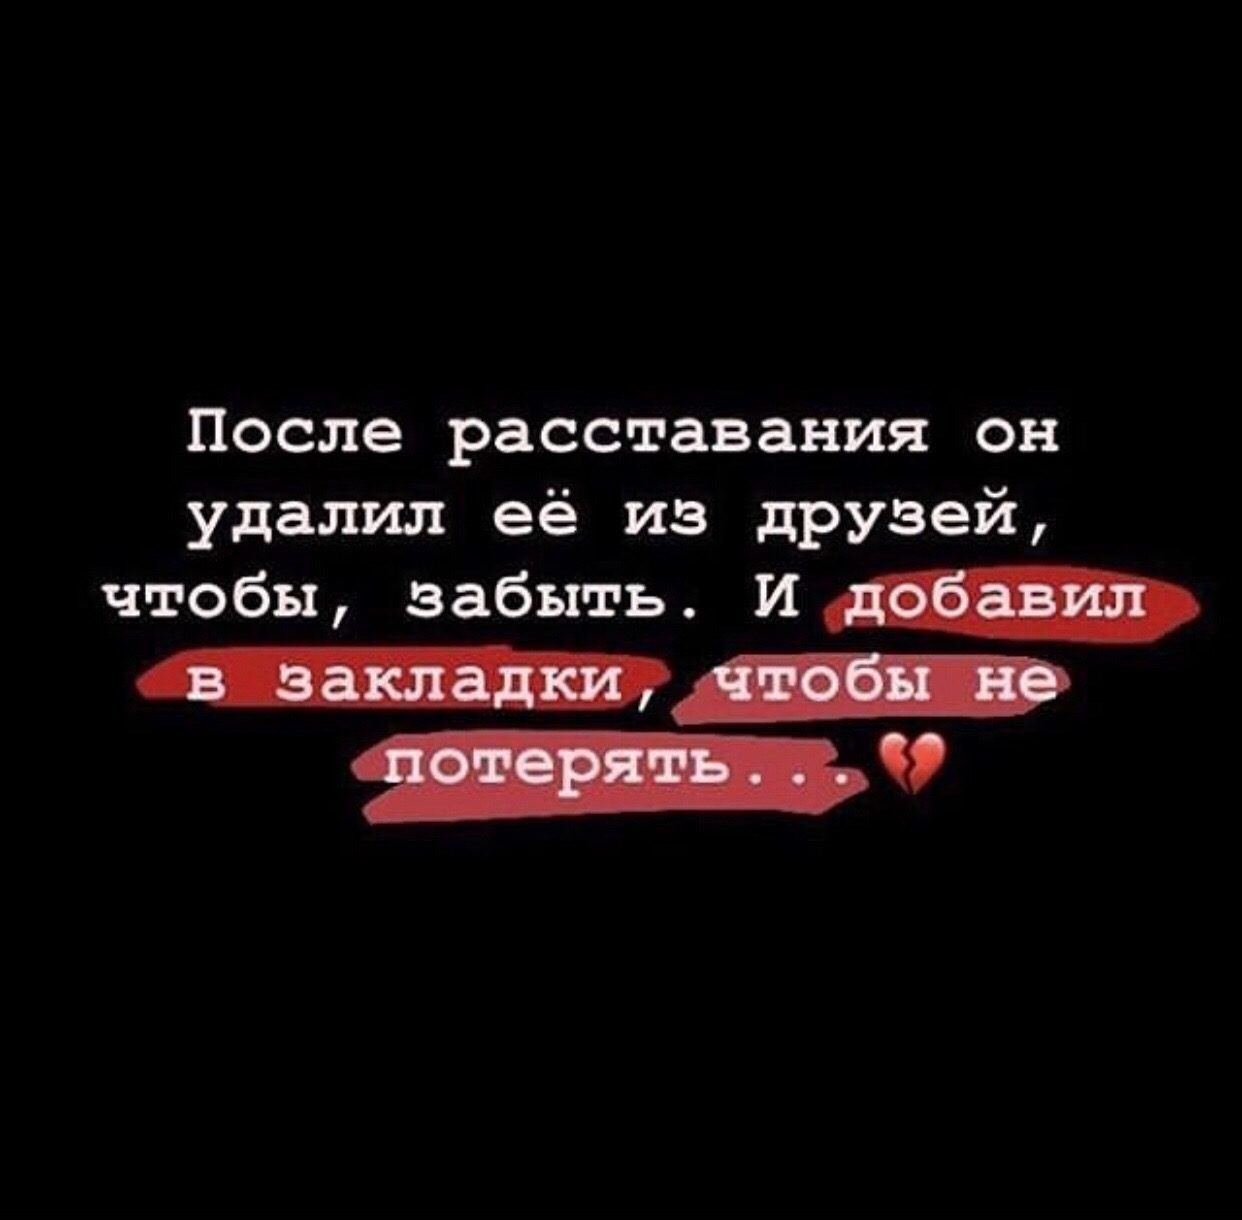 ***Victoria Viktorovna*** - 6  2019  16:50